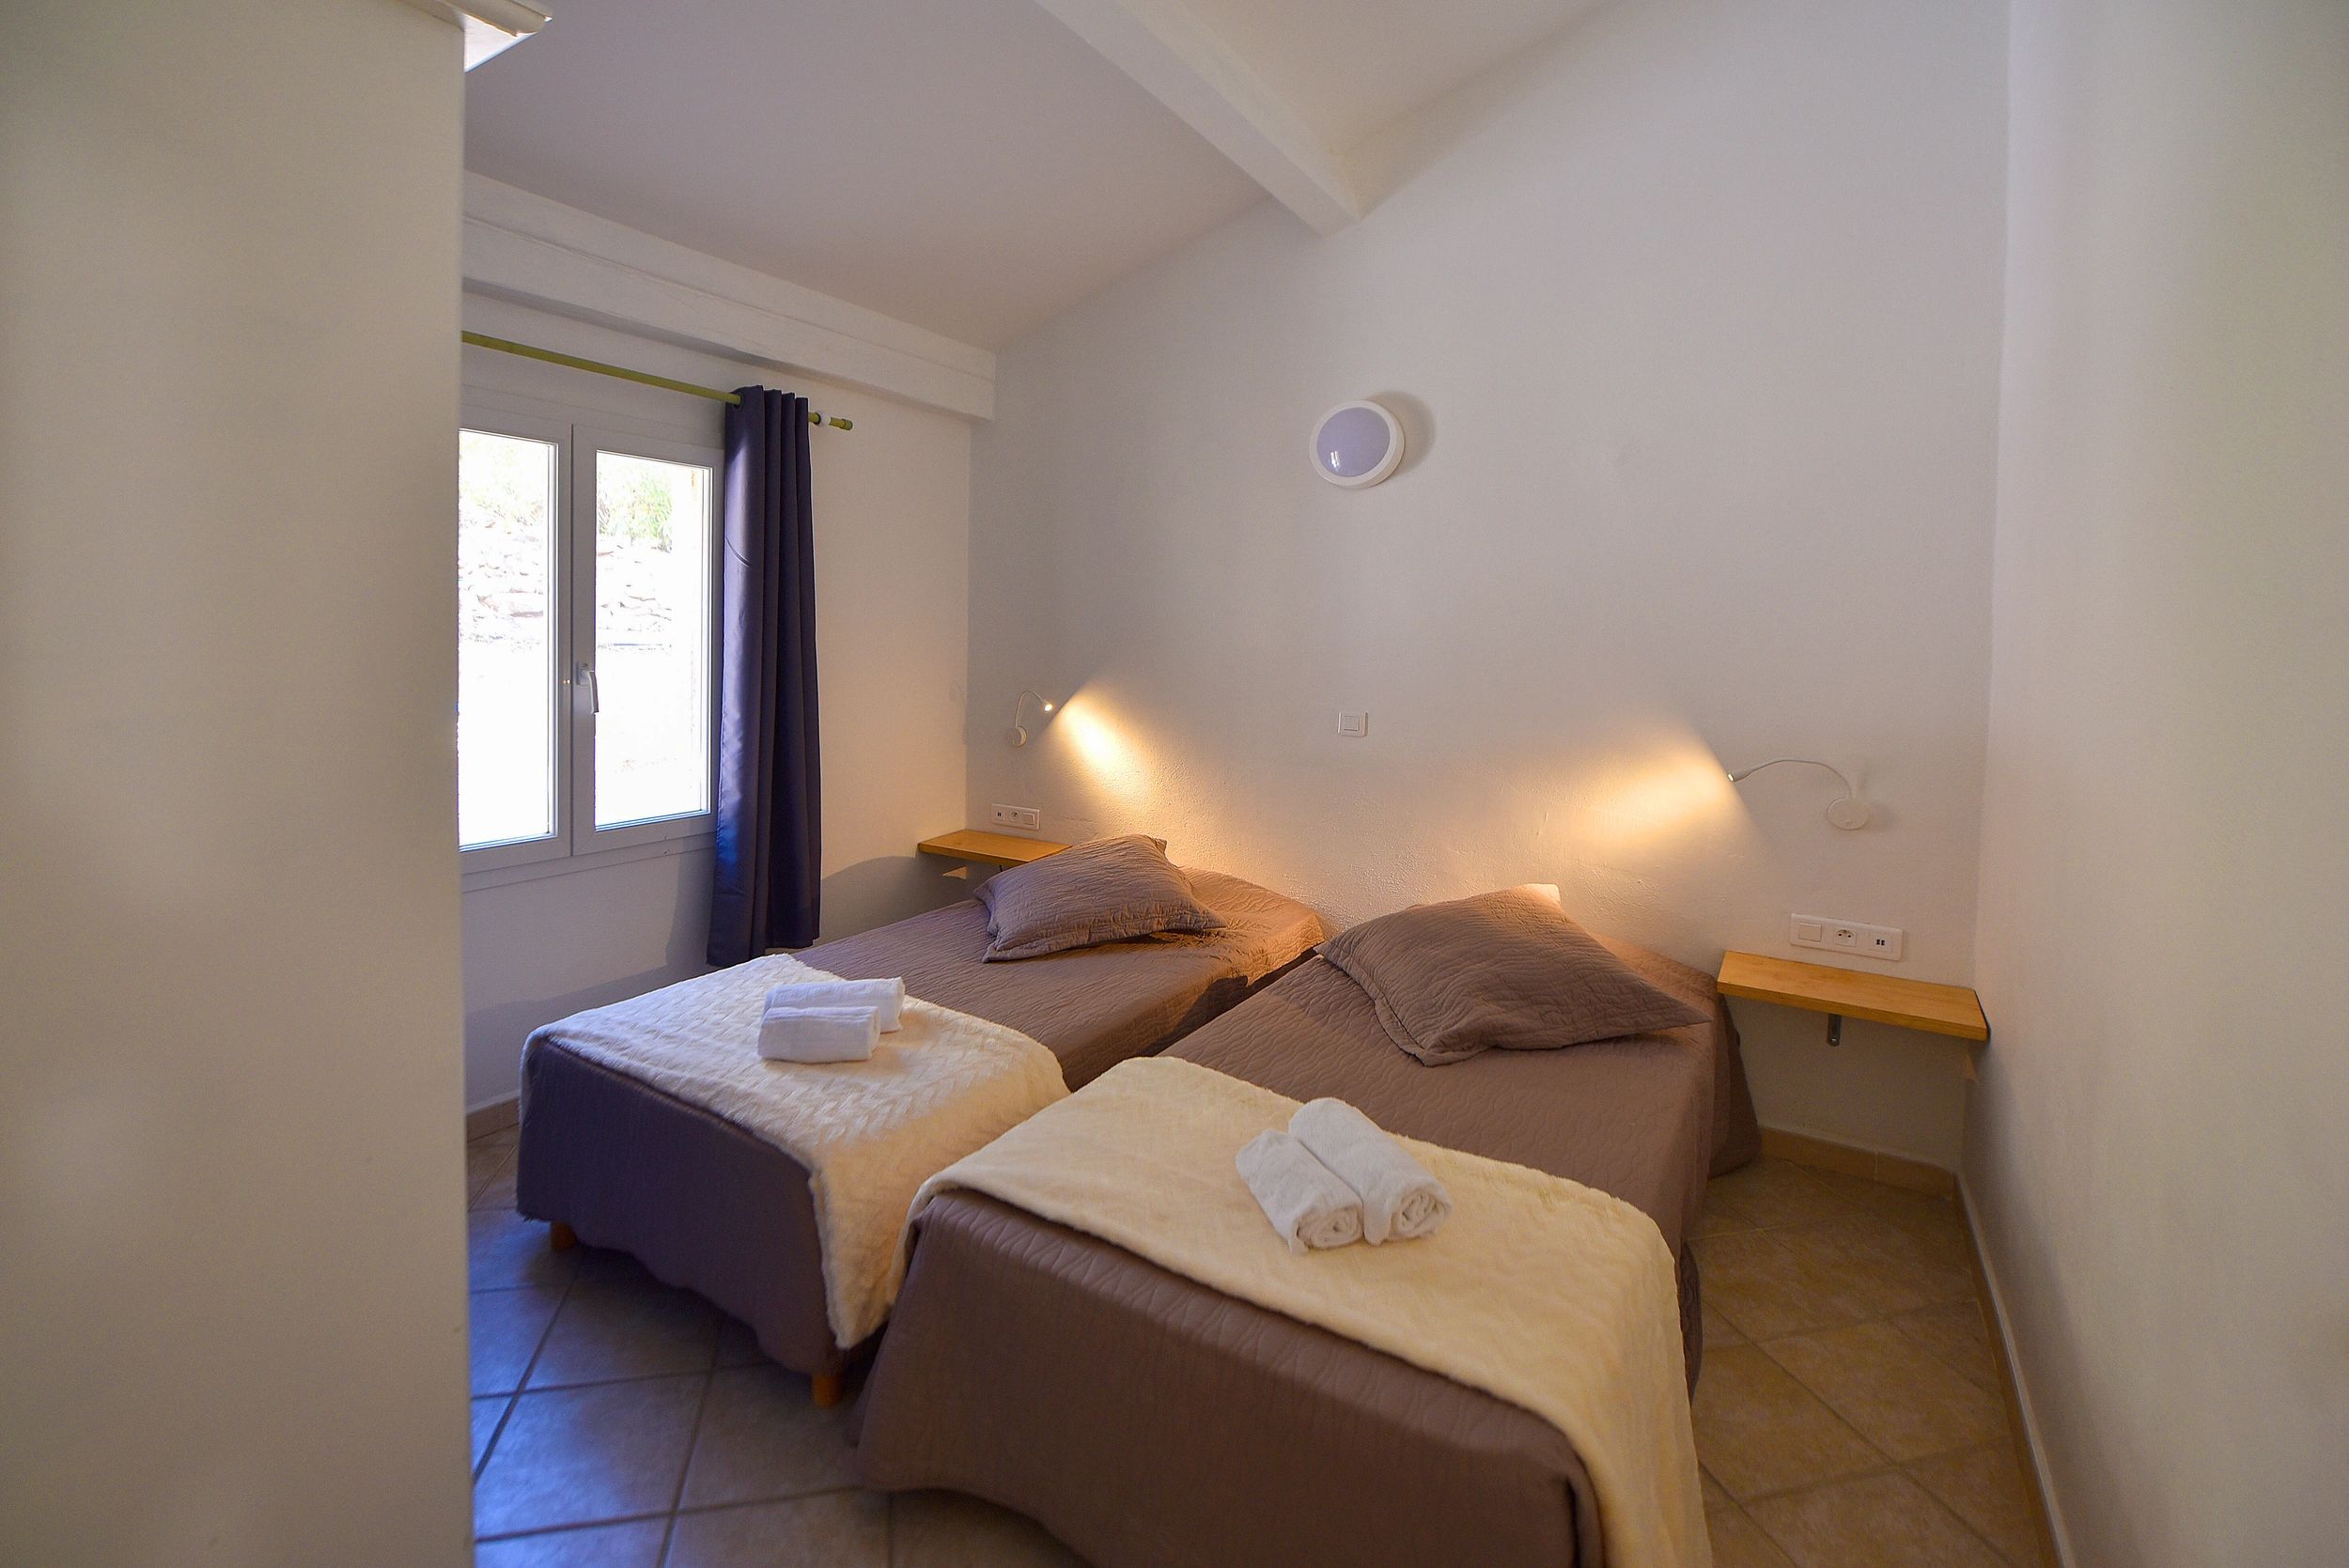 Spacious bedroom in villa to rent with sea view in Porto-Vecchio